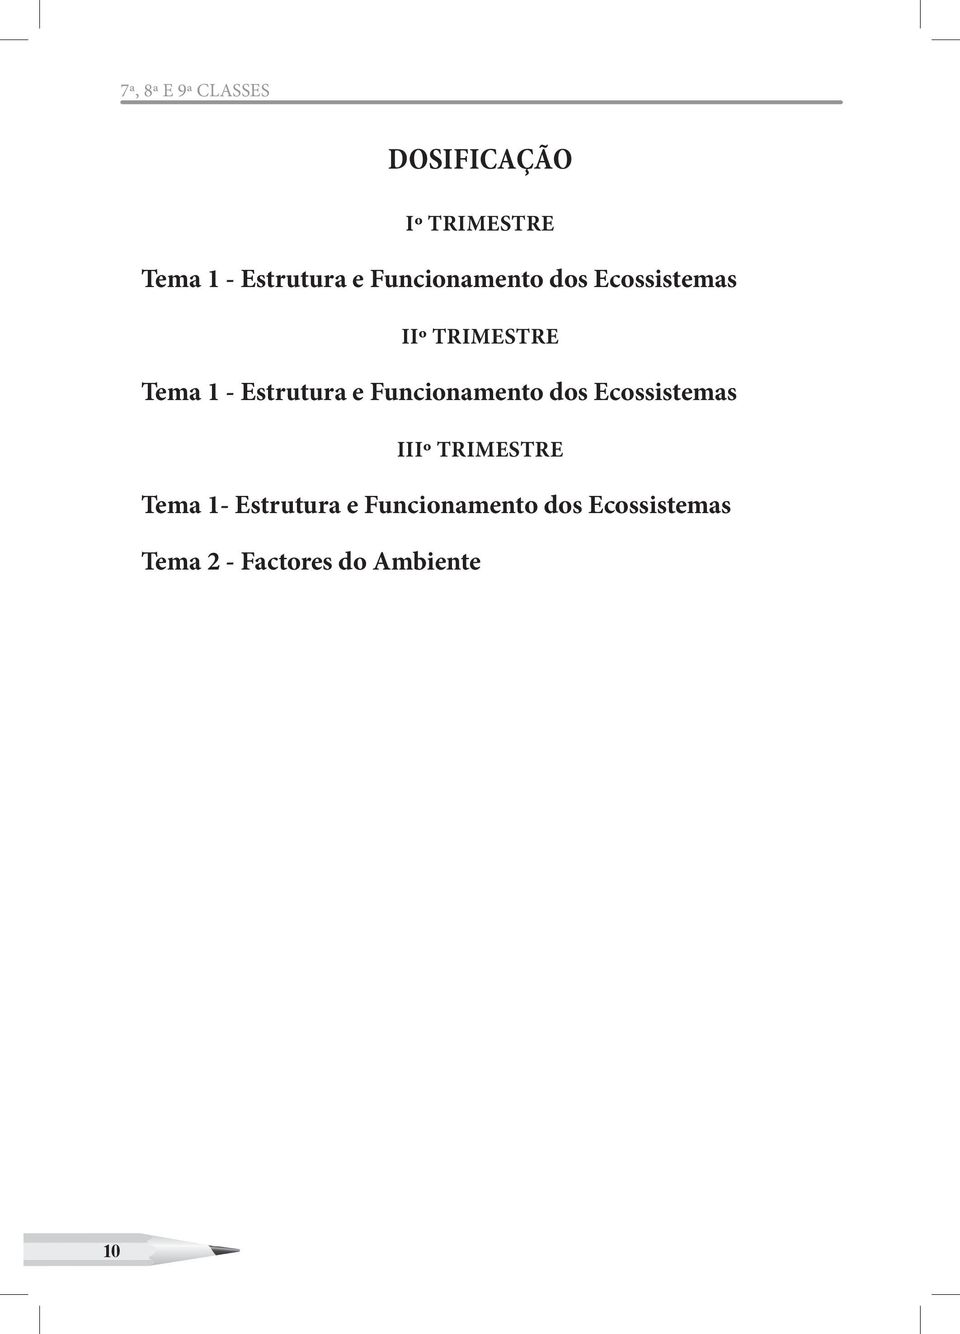 Funcionamento dos Ecossistemas IIIº Trimestre Tema 1- Estrutura e